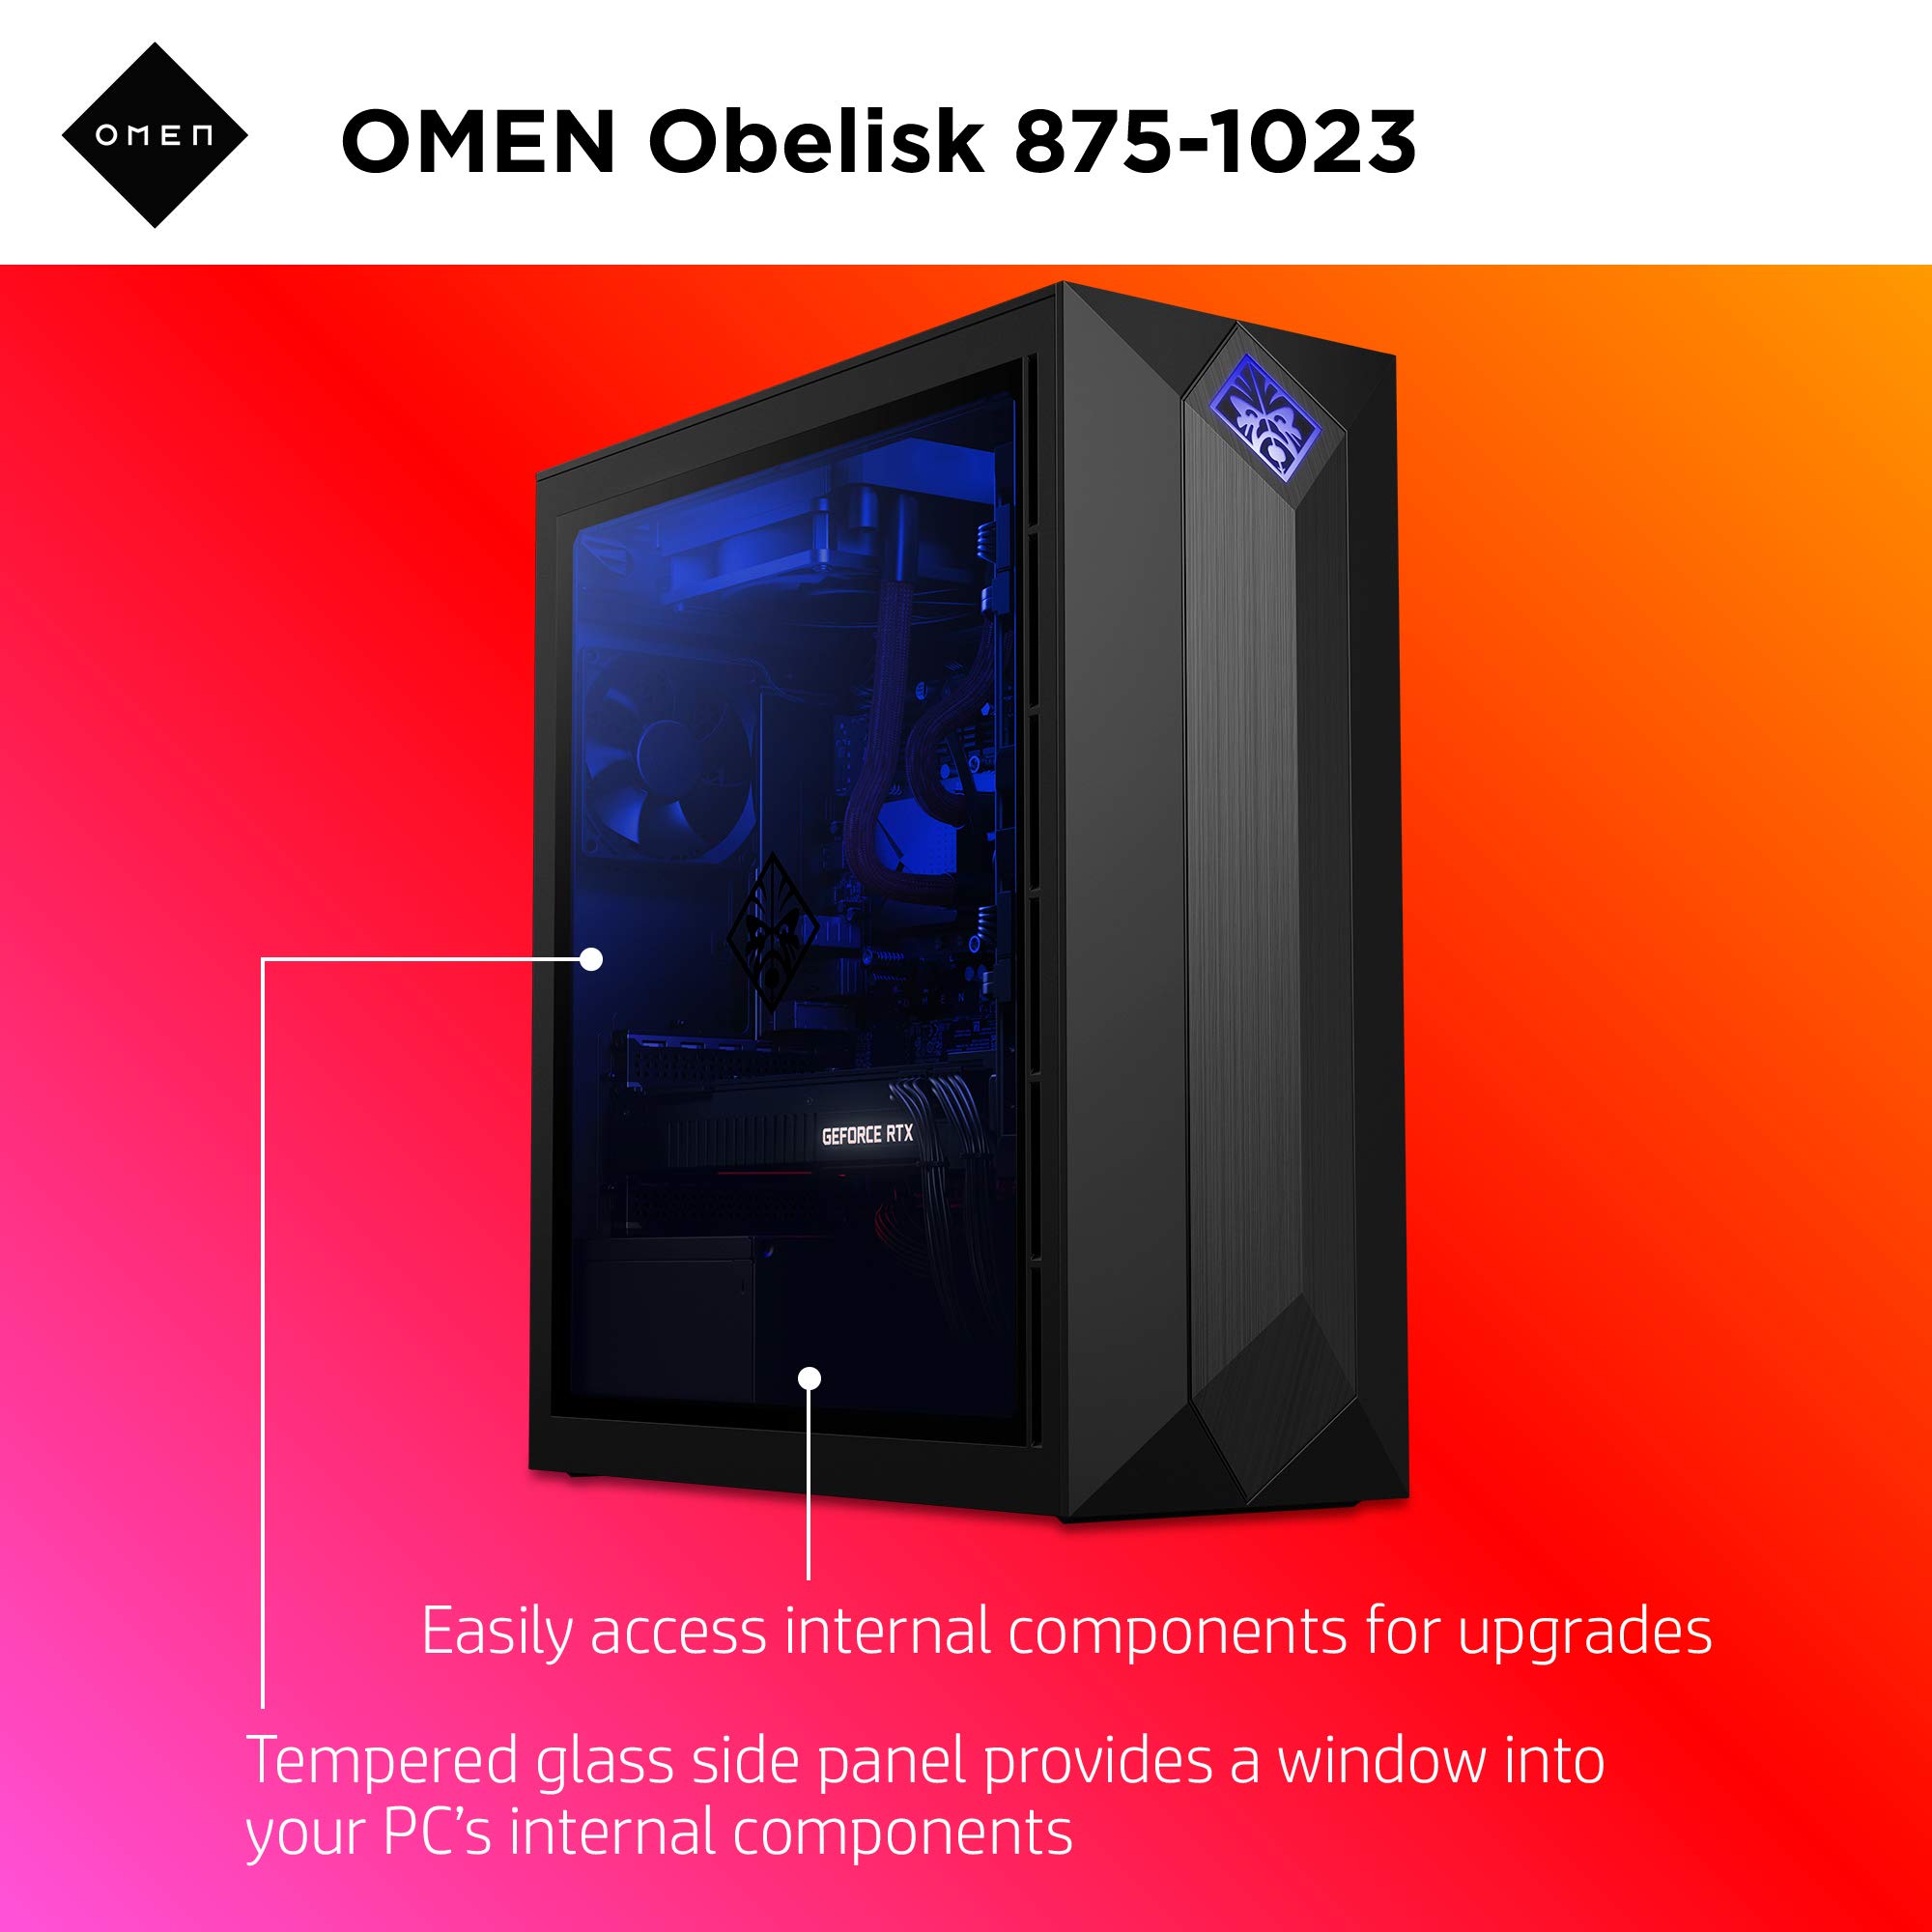 Omen by HP Obelisk Gaming Desktop Computer, 9th Generation Intel Core i9-9900K Processor, NVIDIA GeForce RTX 2080 SUPER 8 GB, HyperX 32 GB RAM, 1 TB SSD, VR Ready, Windows 10 Home (875-1023, Black)